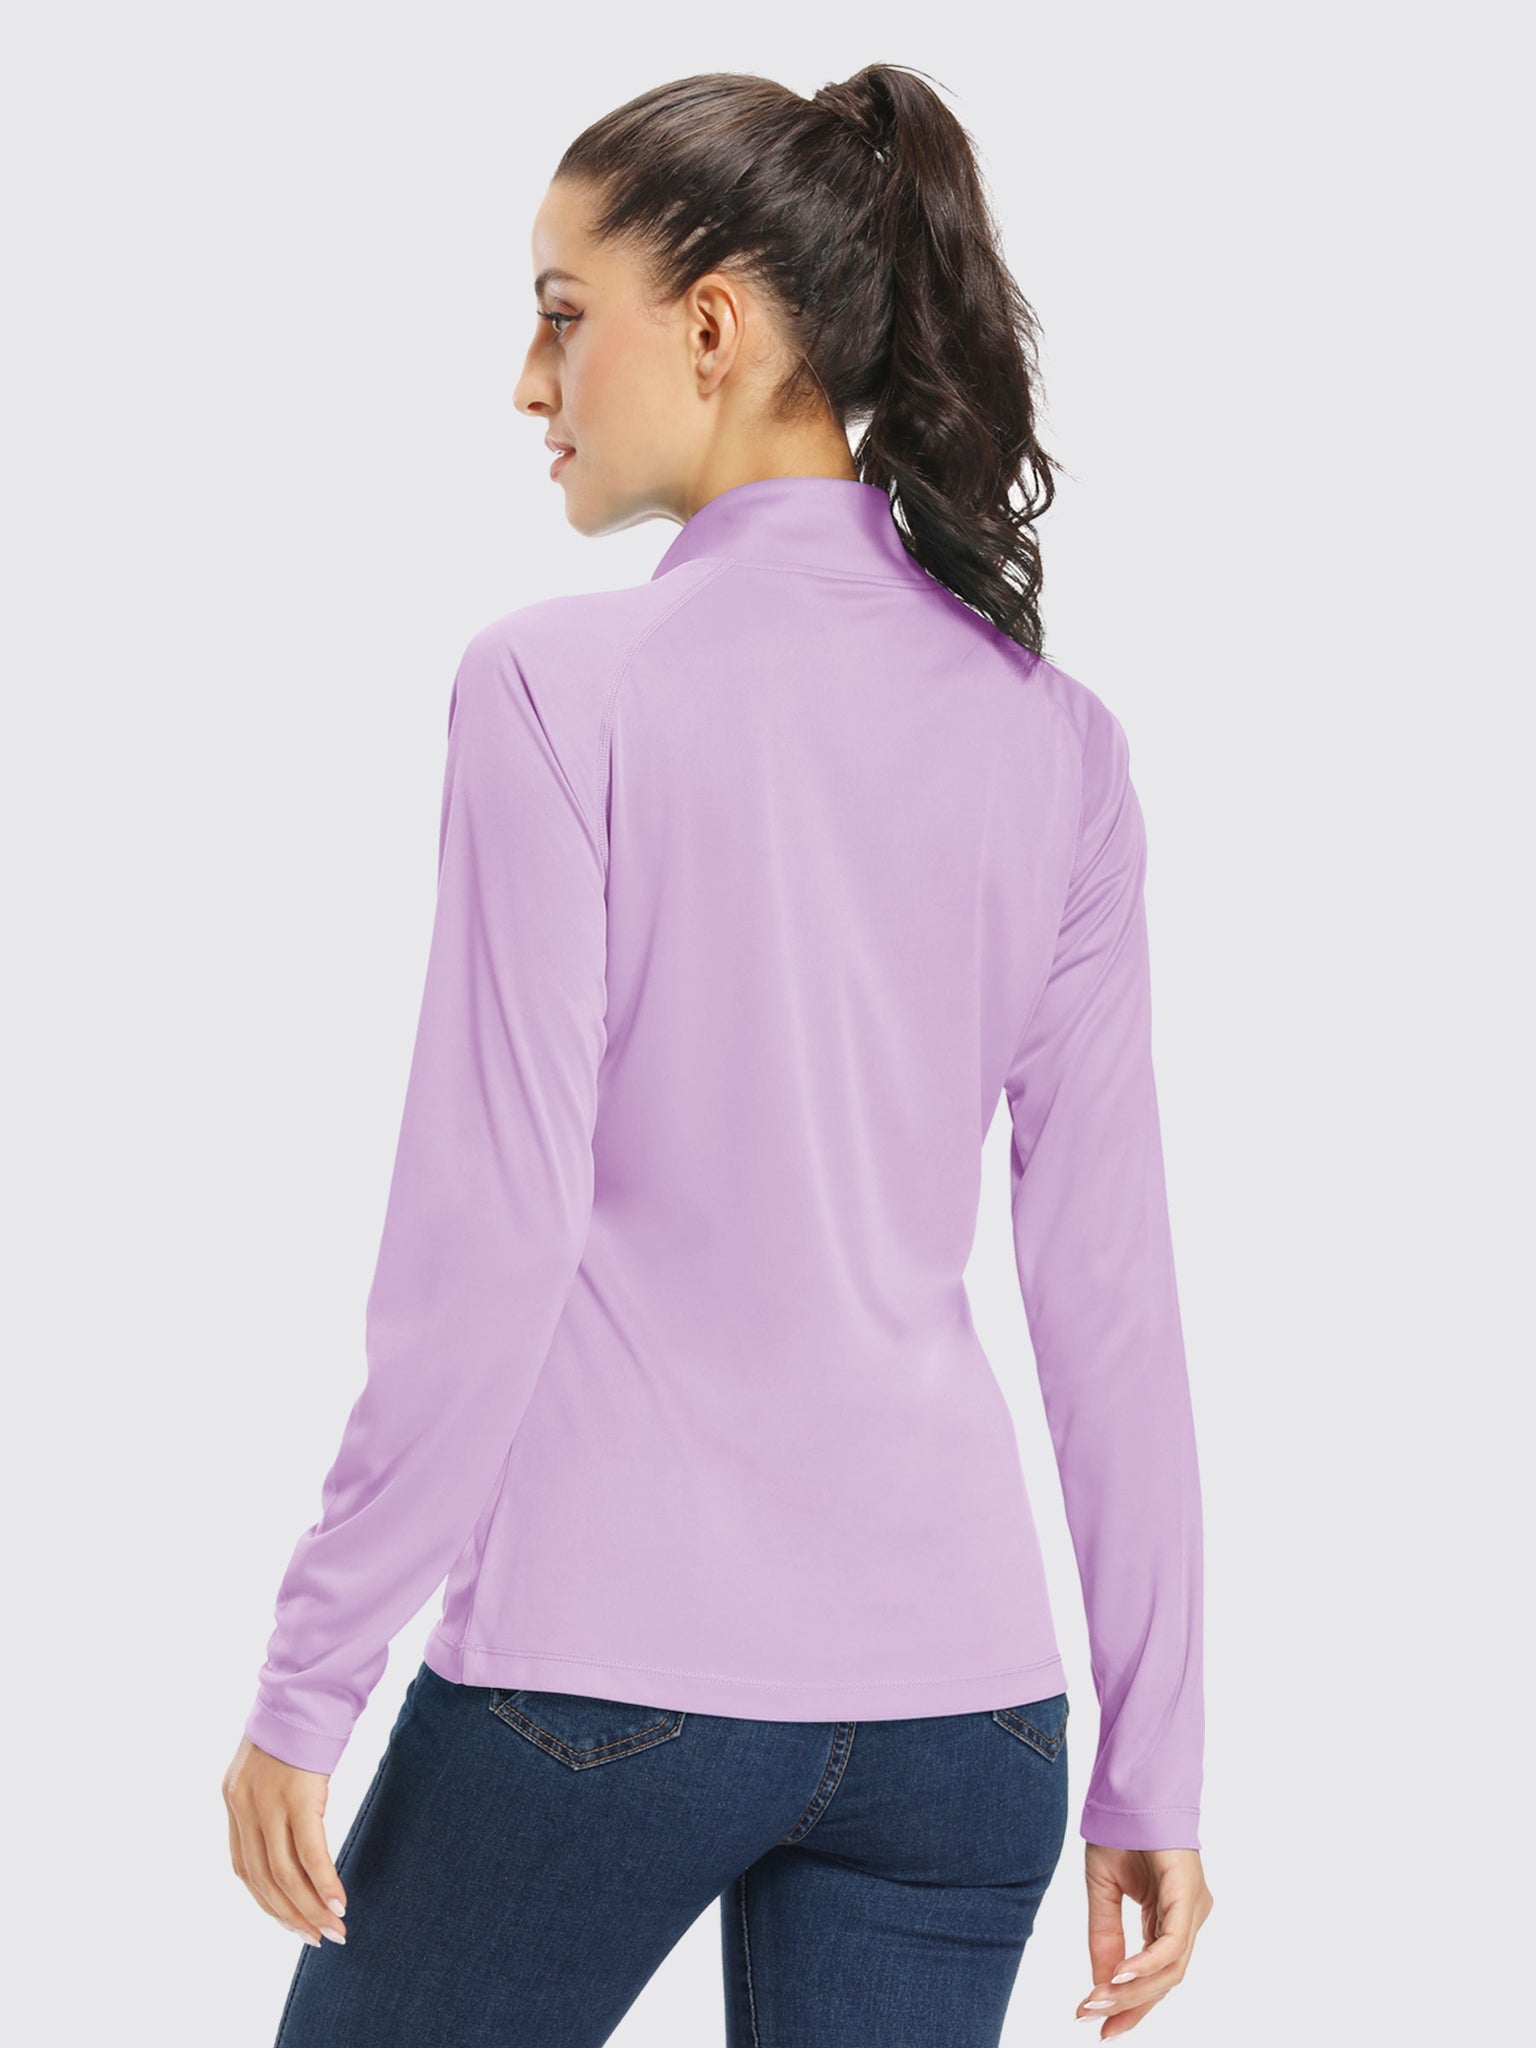 Women's UPF 50+ Sun Protection Shirt Half-Zip